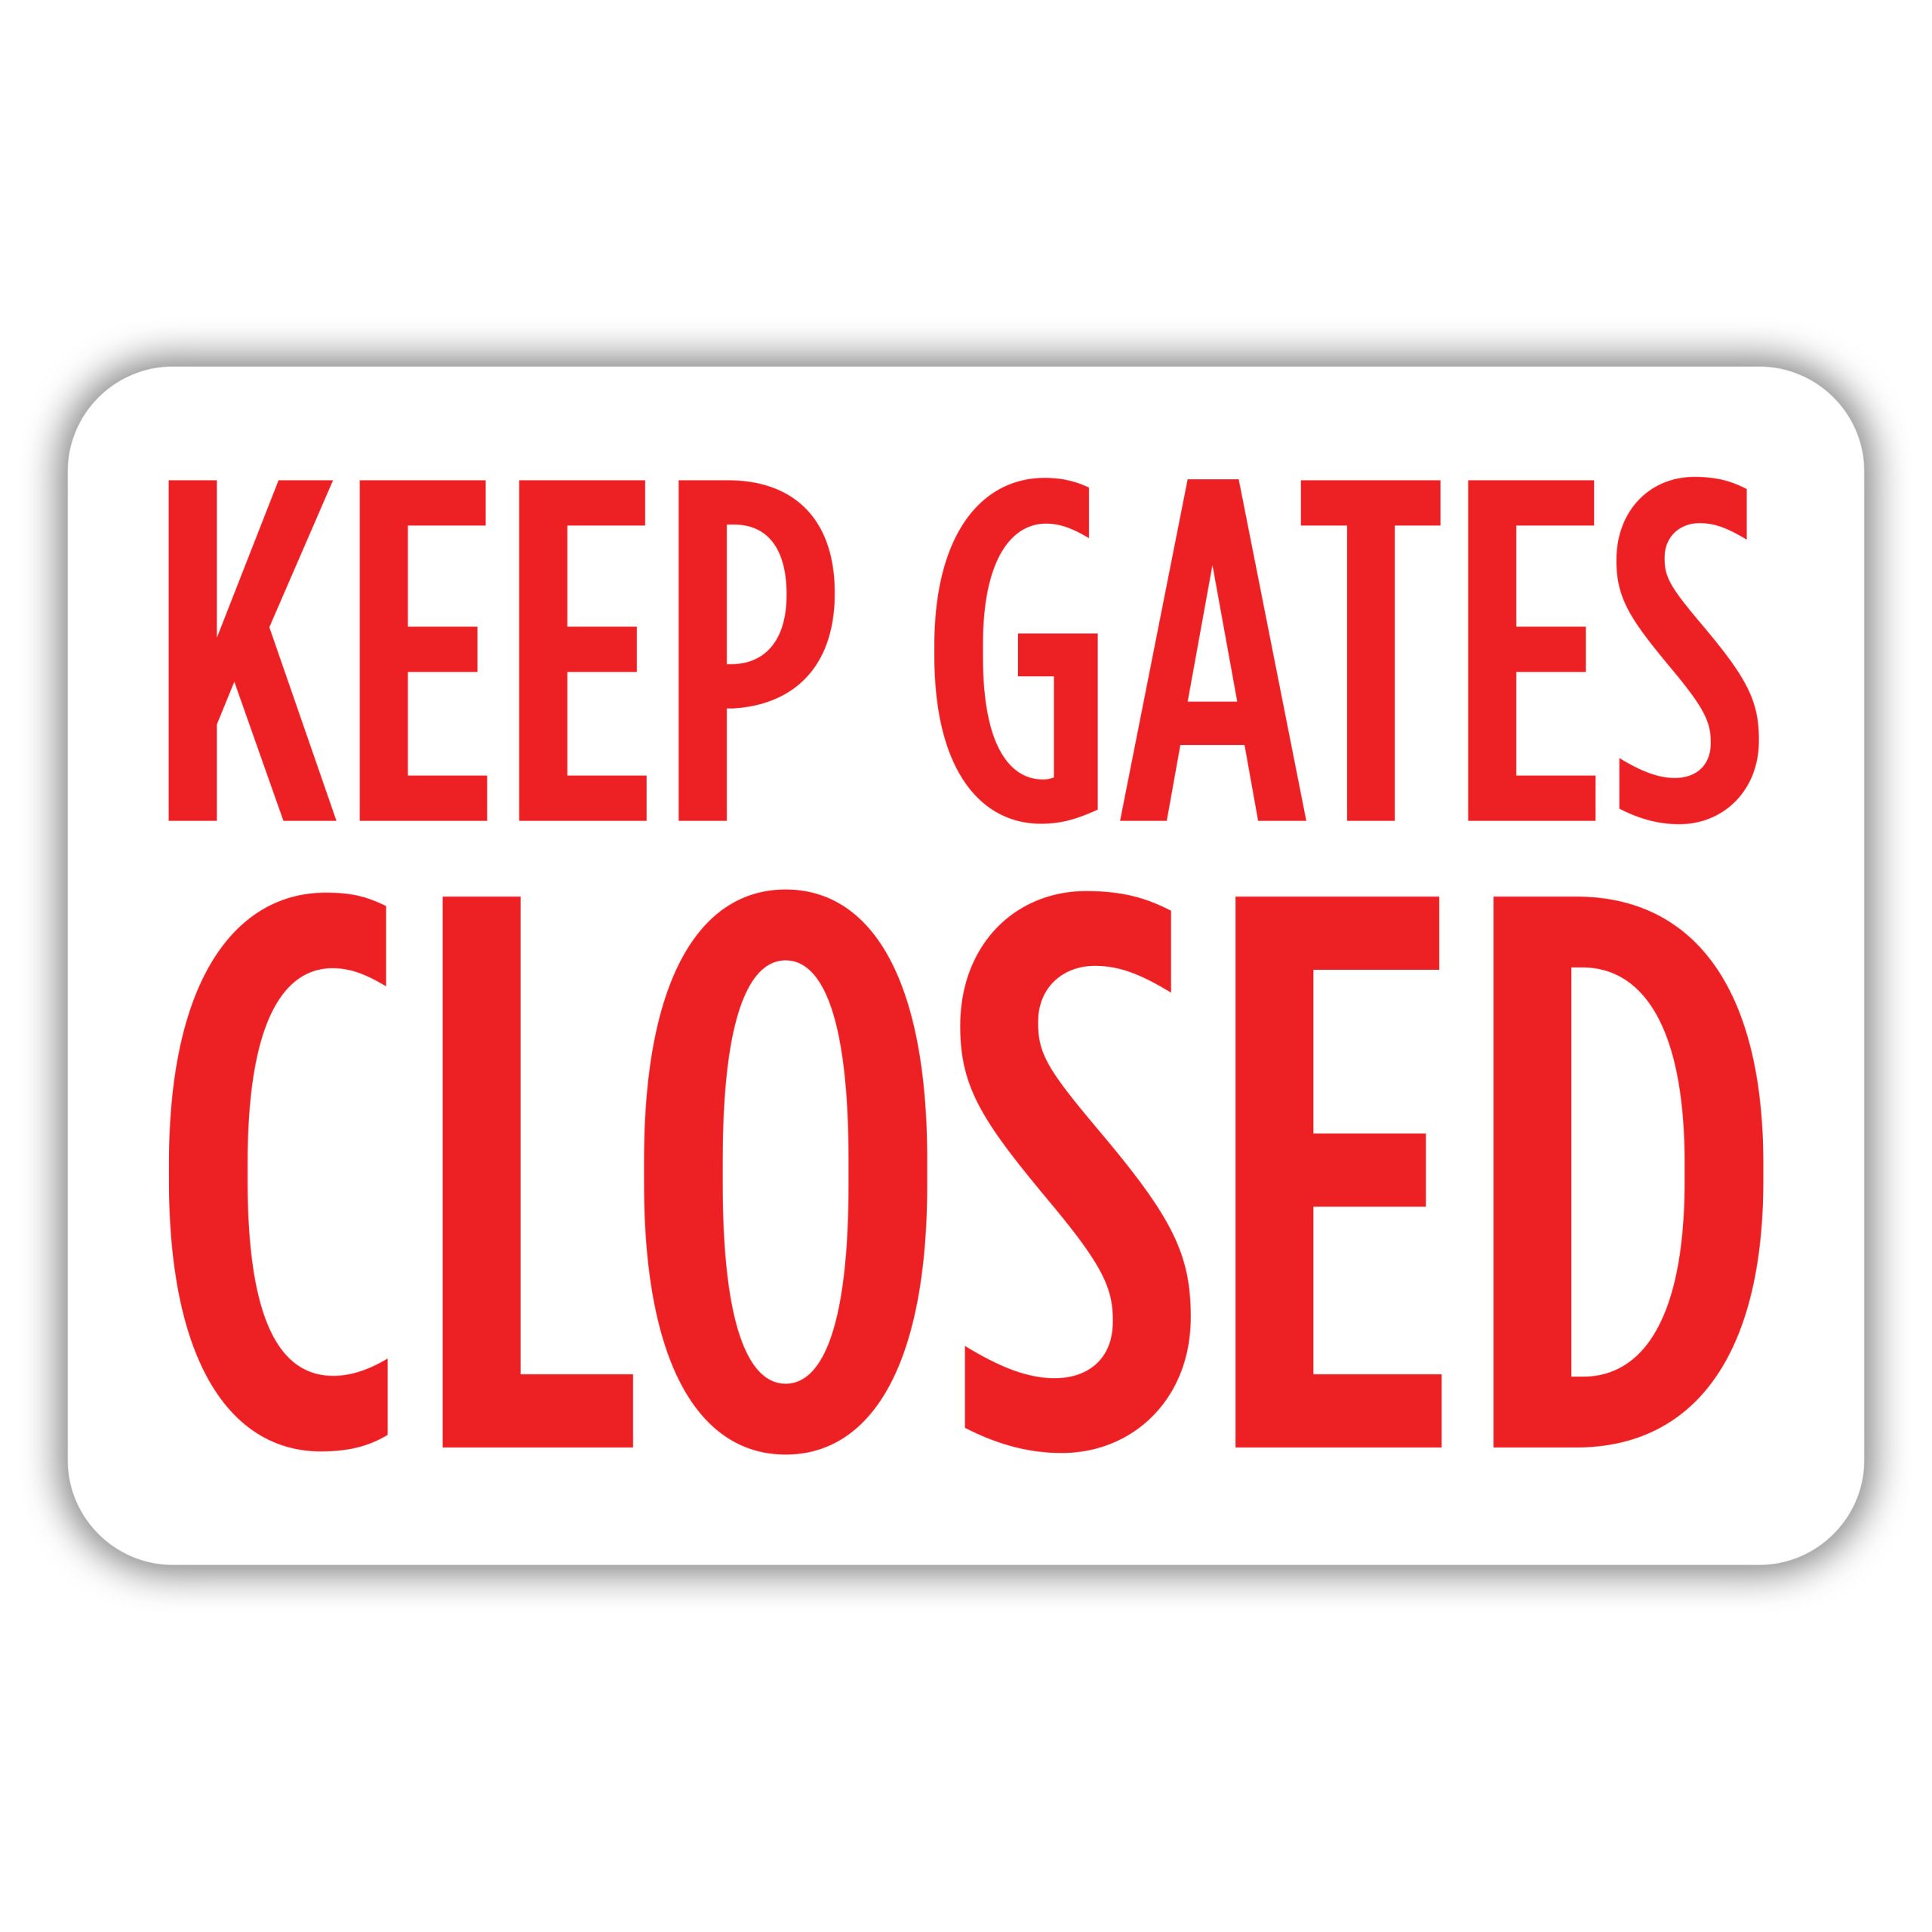 KEEP GATES CLOSED - American Sign Company